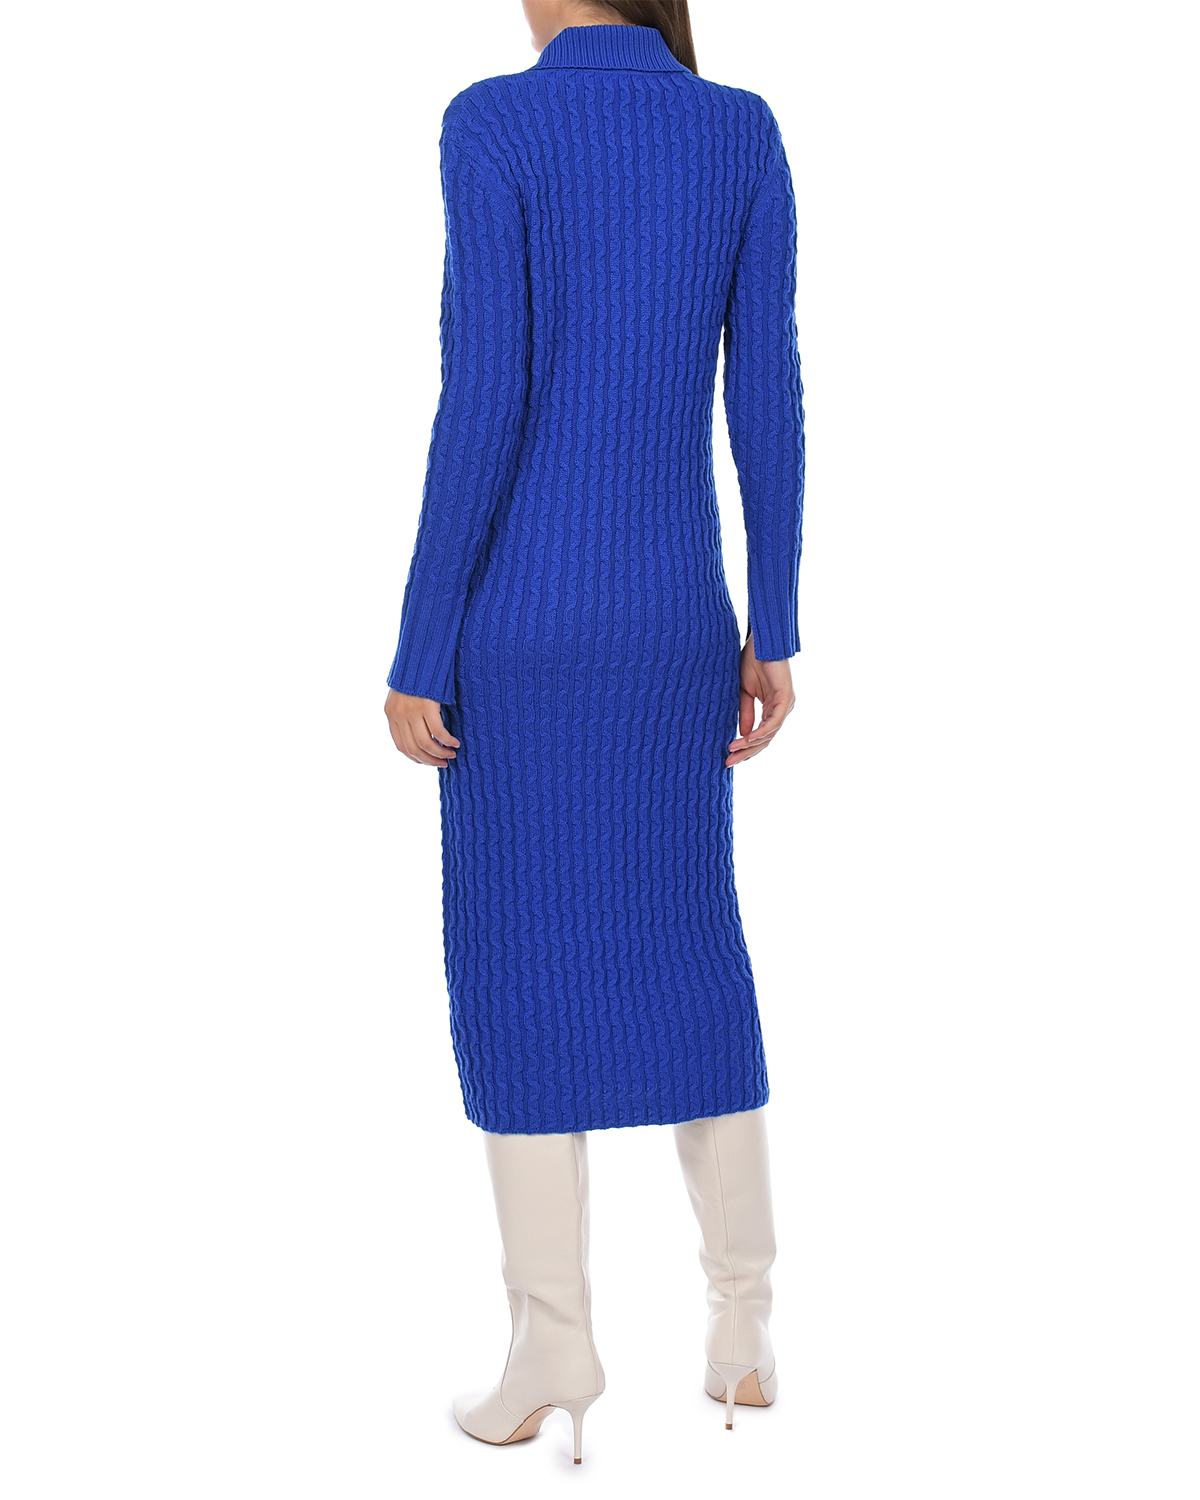 Ярко-синее платье из трикотажа Vivetta, размер 42, цвет нет цвета - фото 4